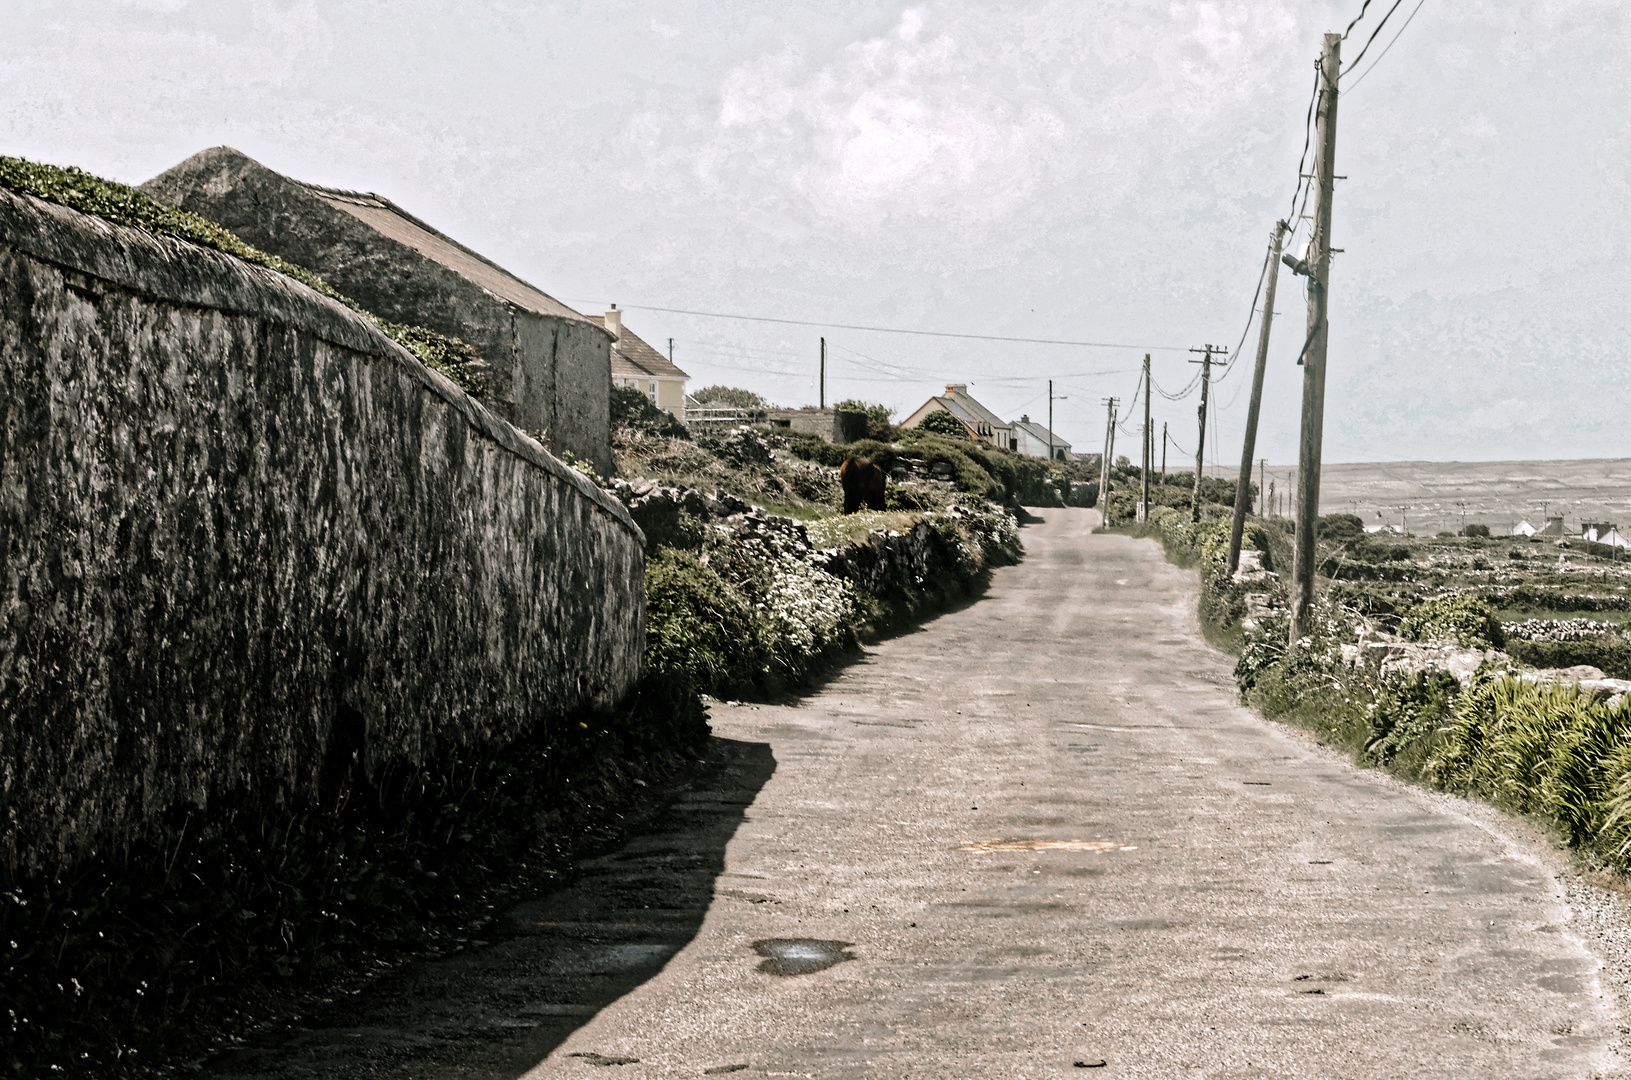 Long Road Aran Islands